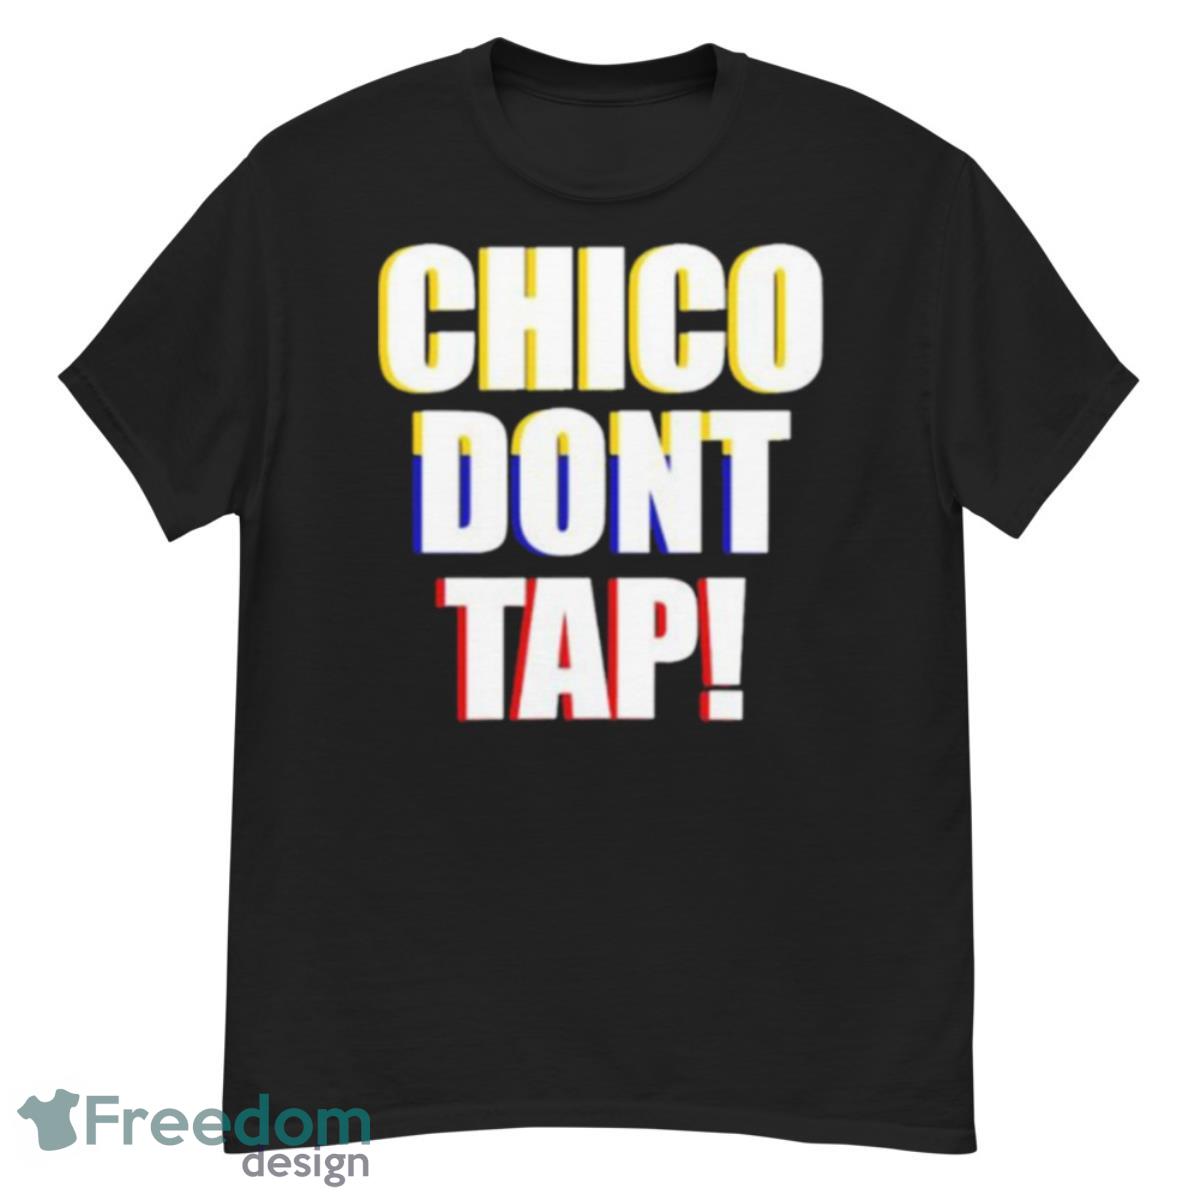 Chico don’t tap shirt - G500 Men’s Classic T-Shirt